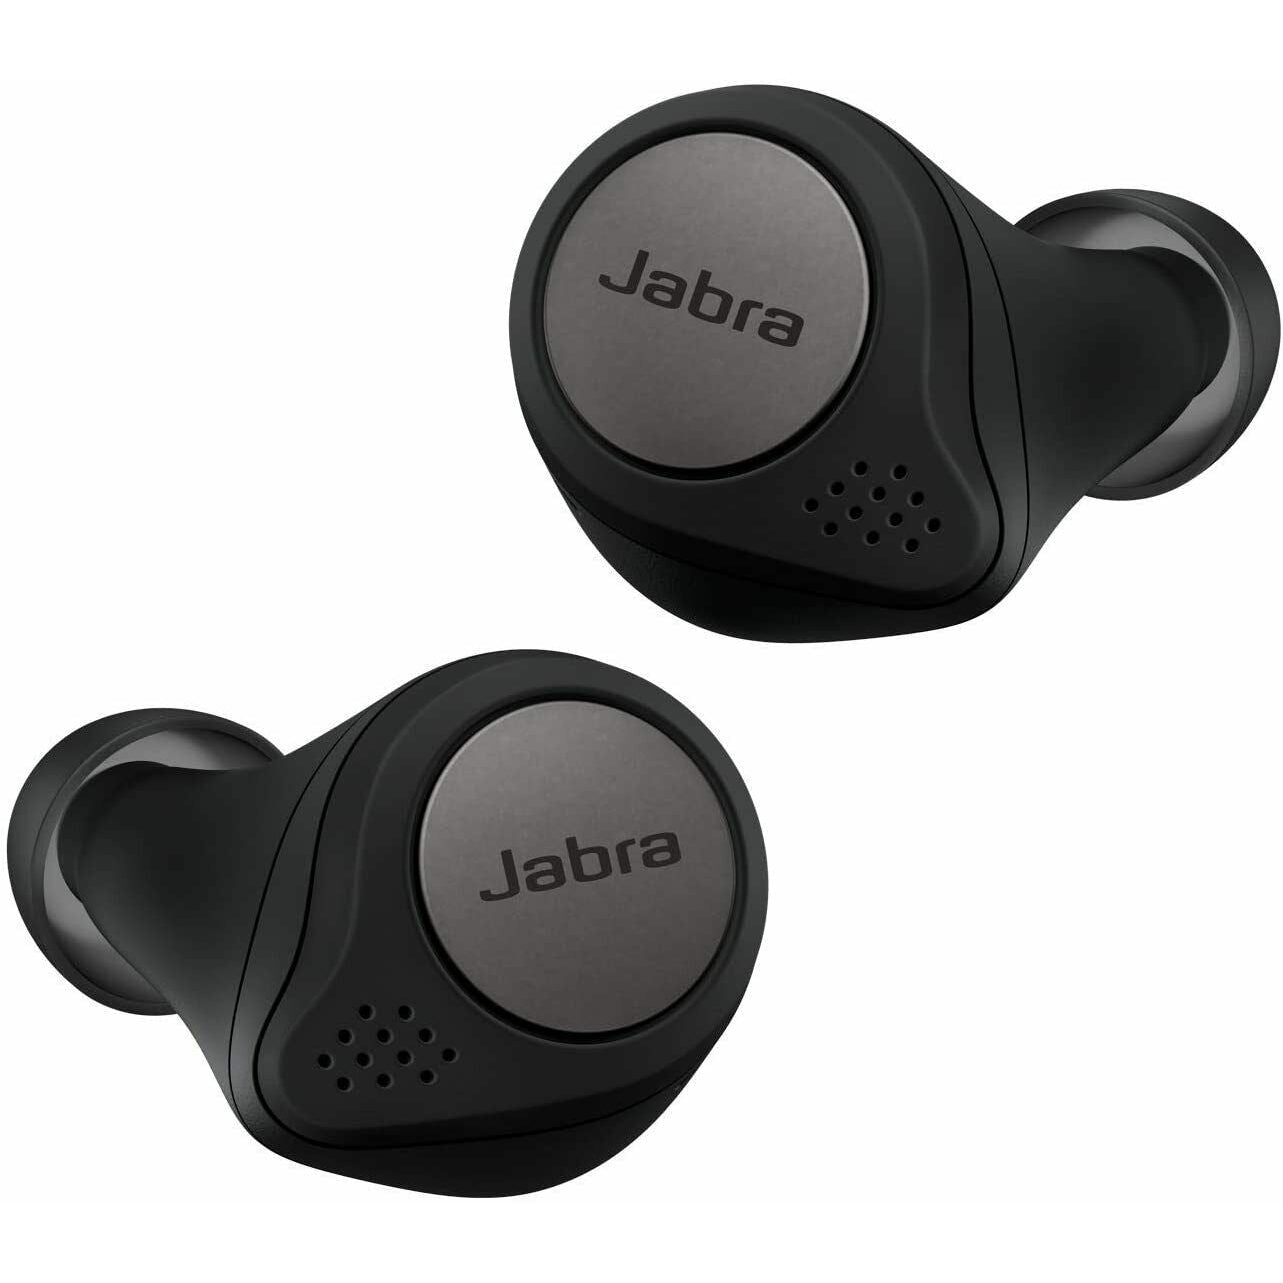 Jabra Elite Active 75T Wireless Bluetooth Earphones - Black - Refurbished Pristine